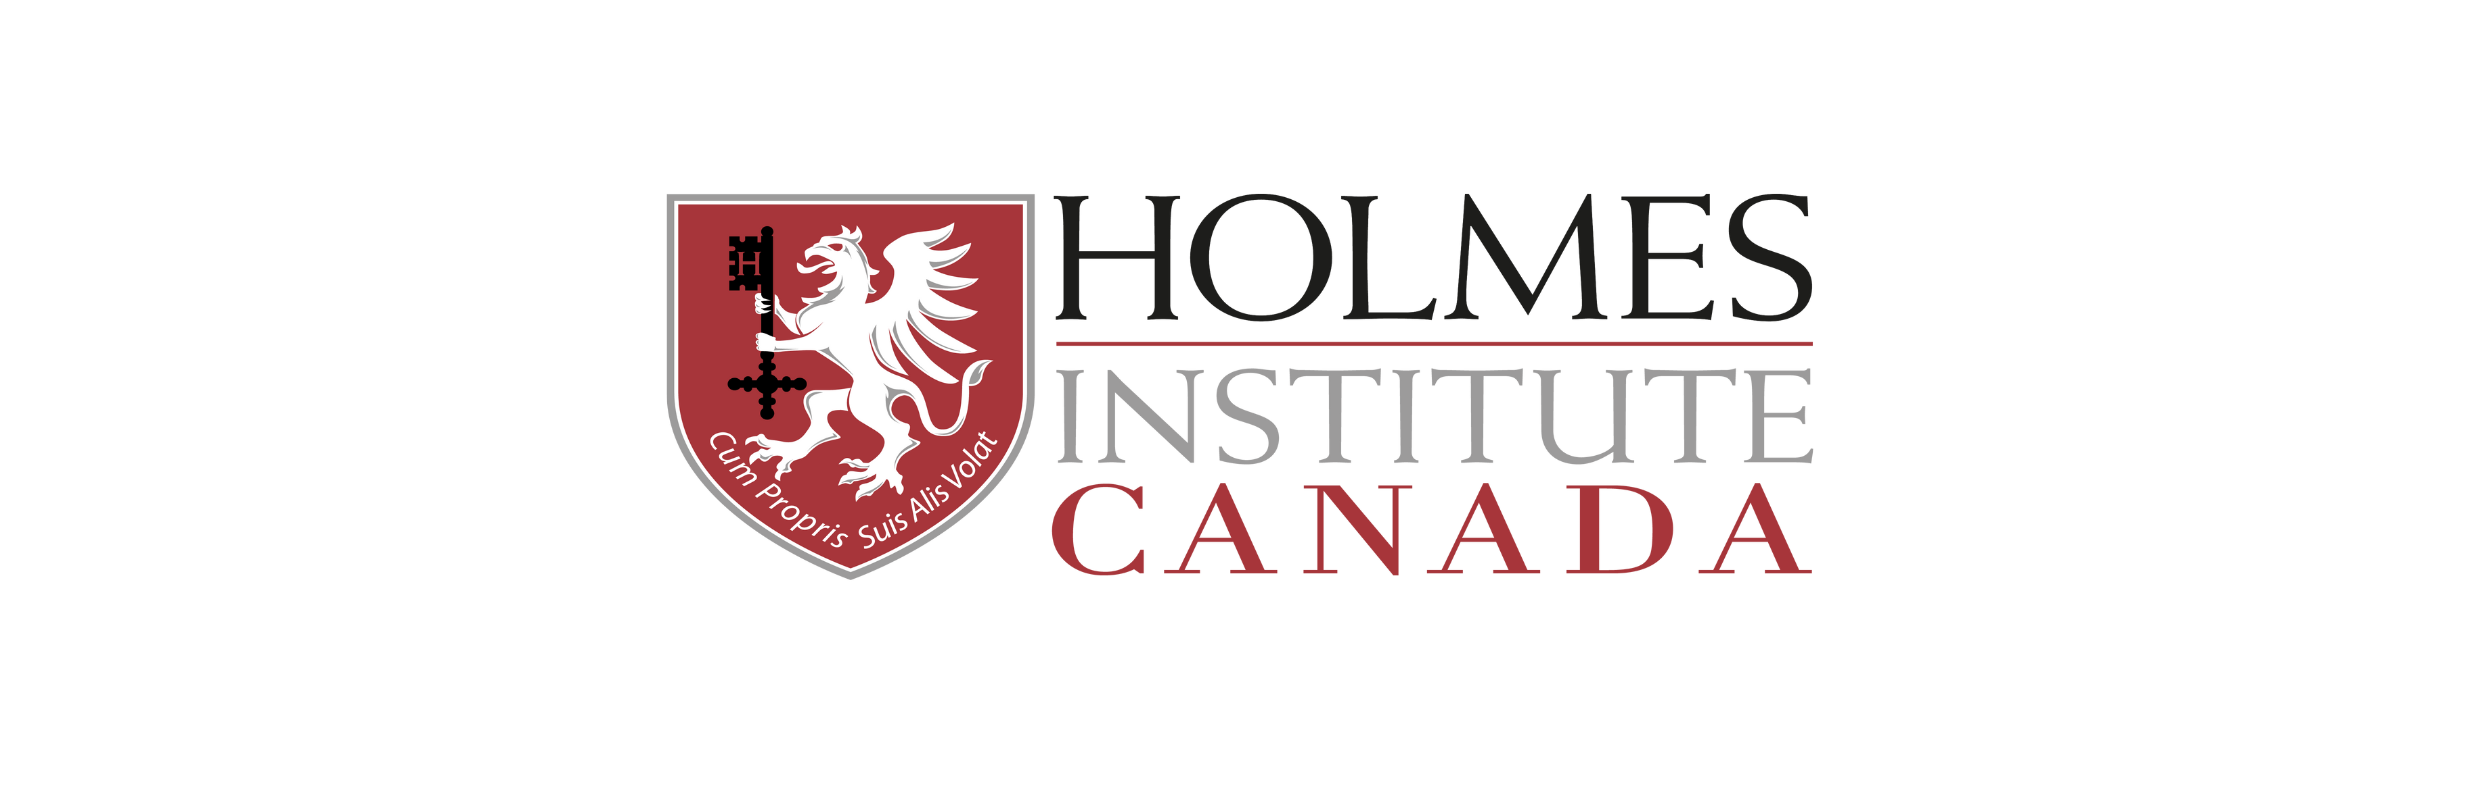 Holmes Institute Canada